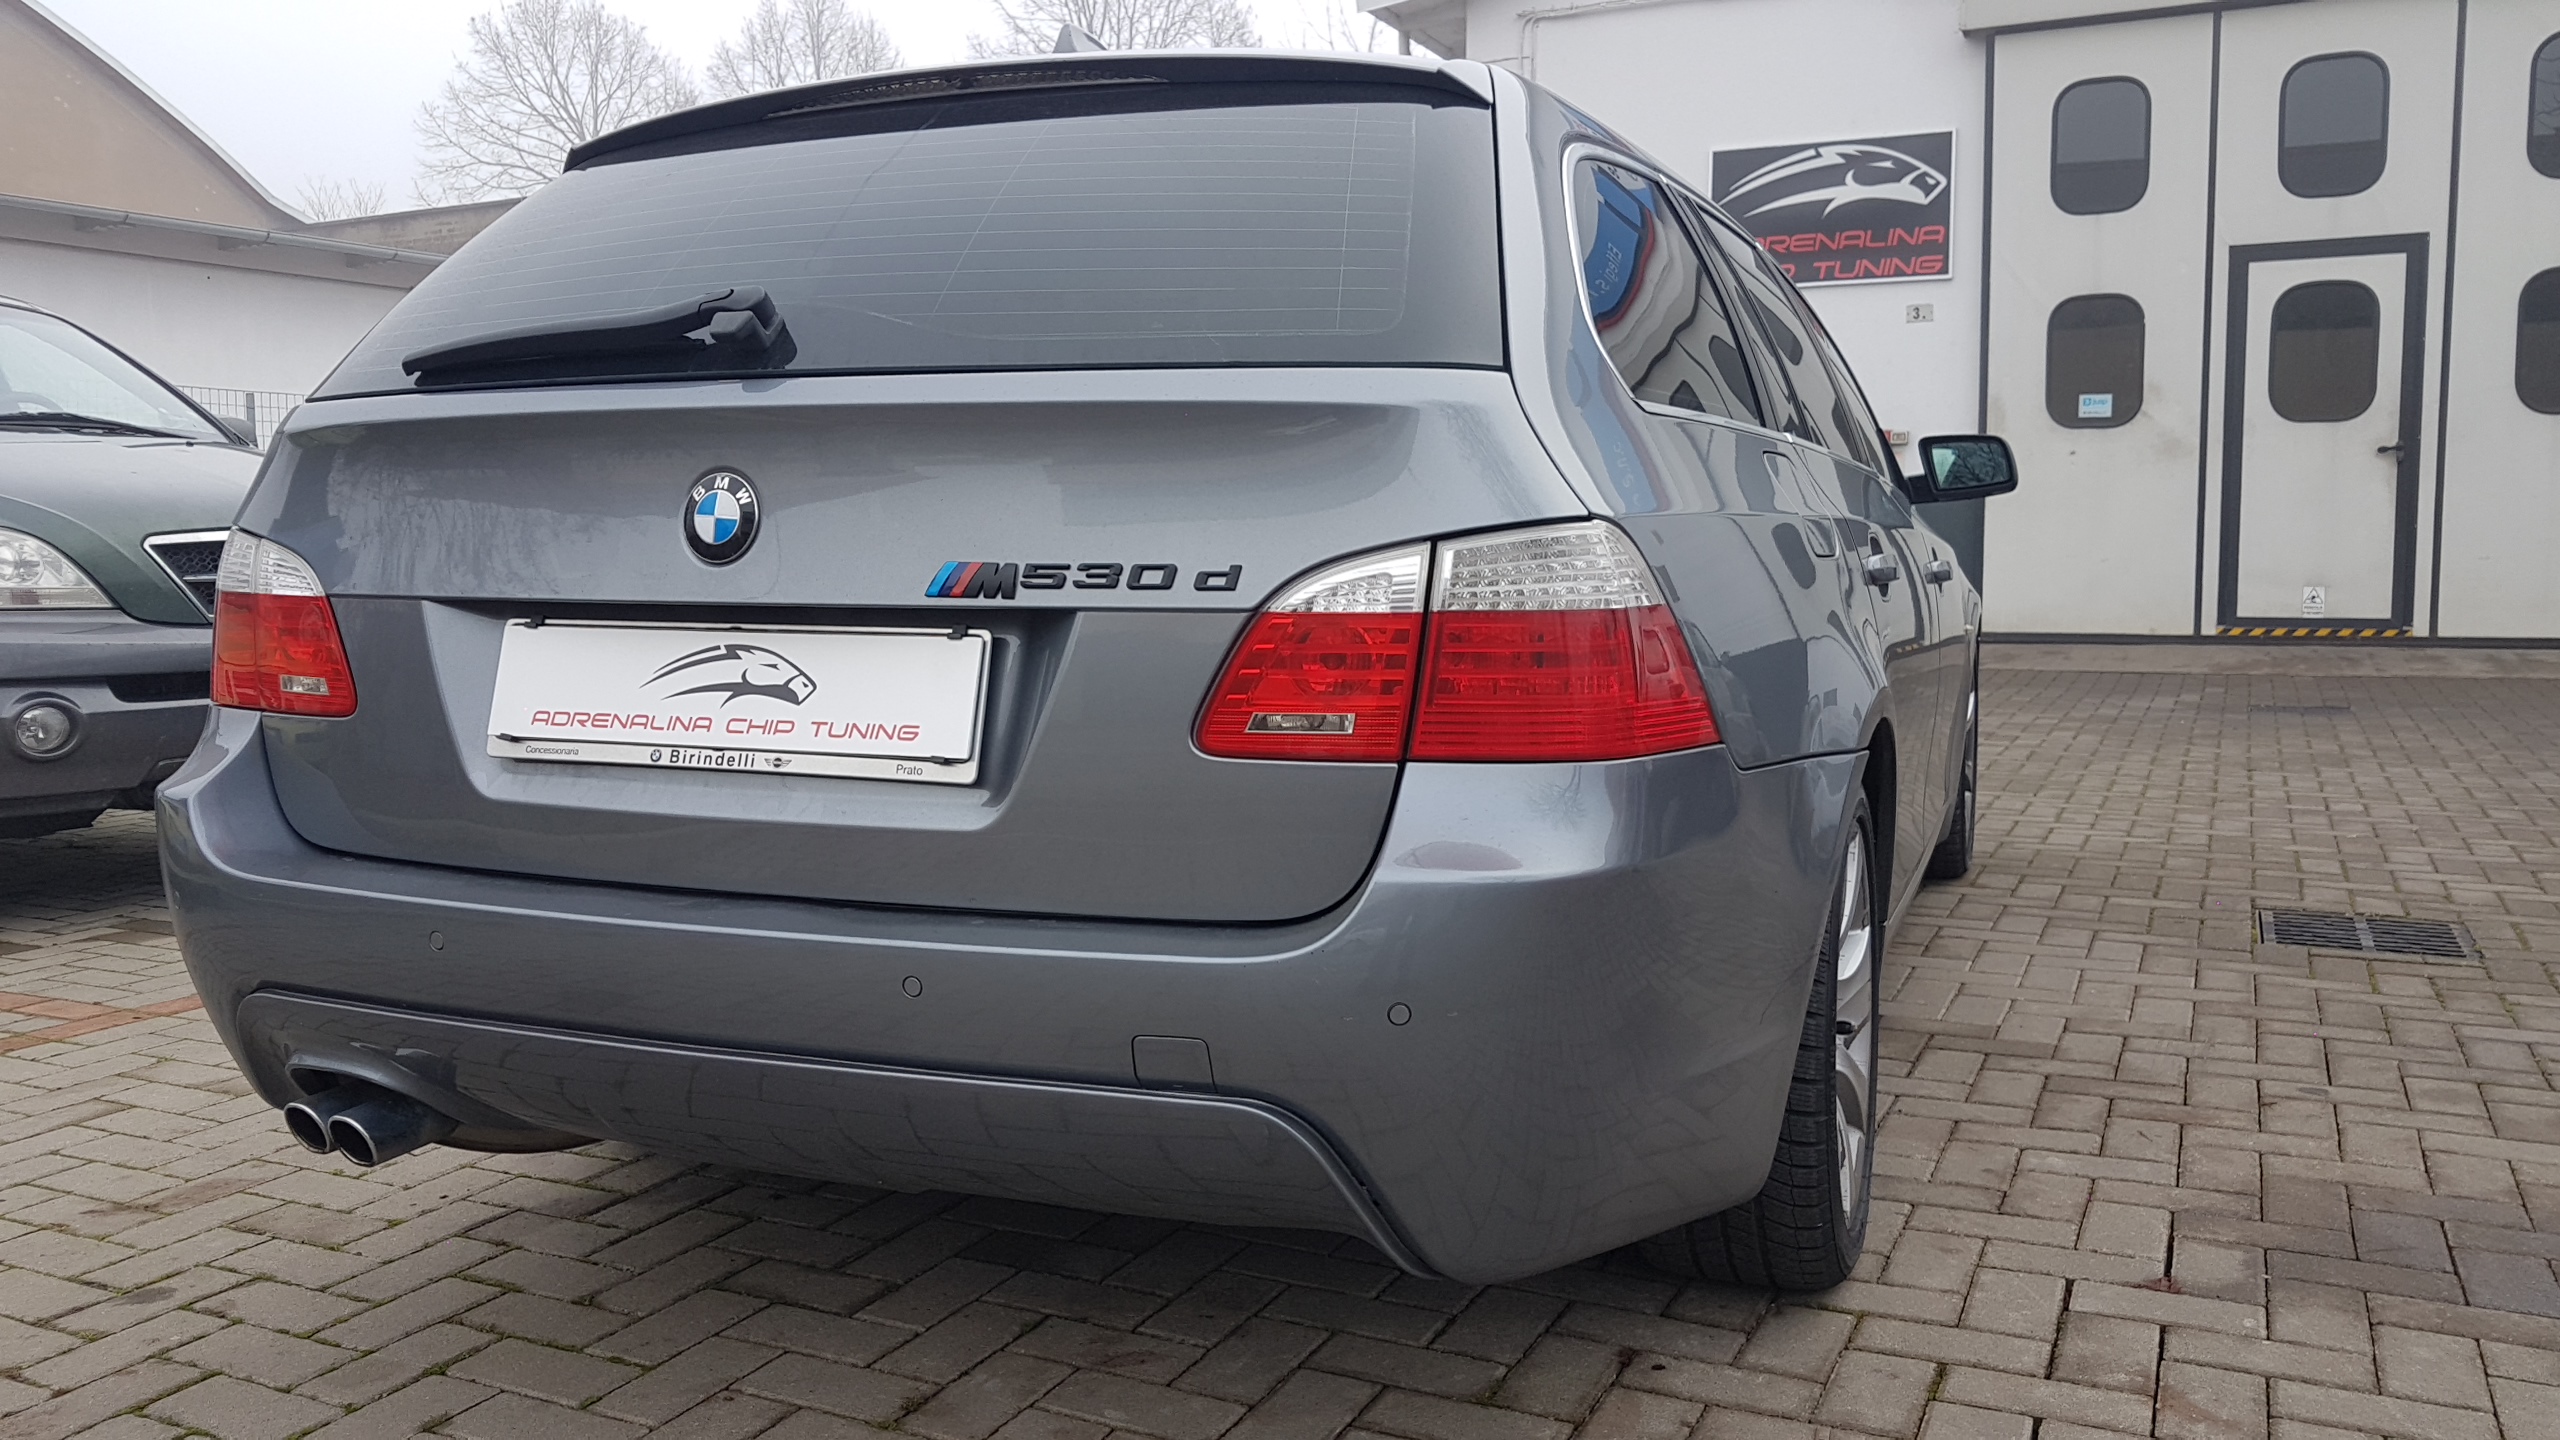 BMW 530d E61 235cv Adrenalina Chip Tuning